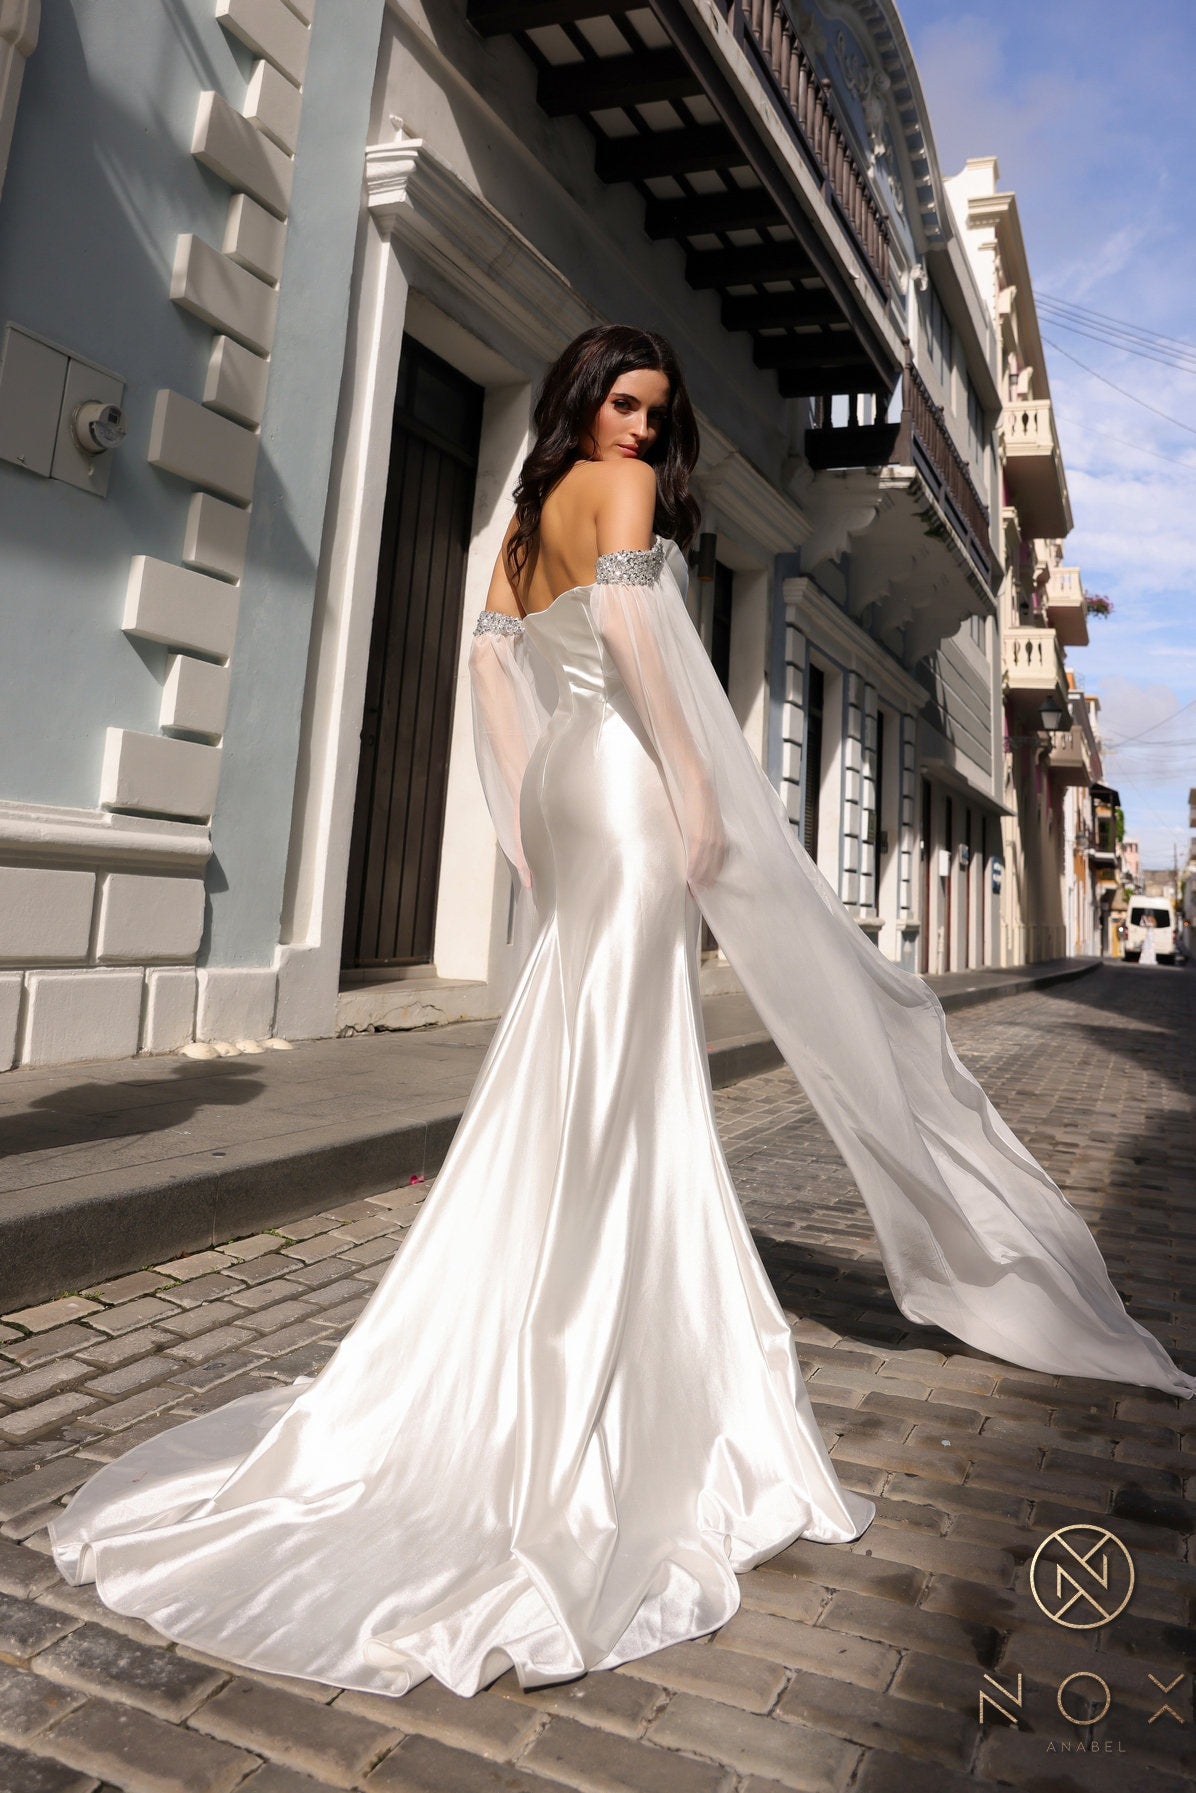 Fitted Off the Shoulder Sweetheart Neckline Wedding Dress Bridal Gown Prom Formal Gala Dress Satin Side Slit Emerald White Black